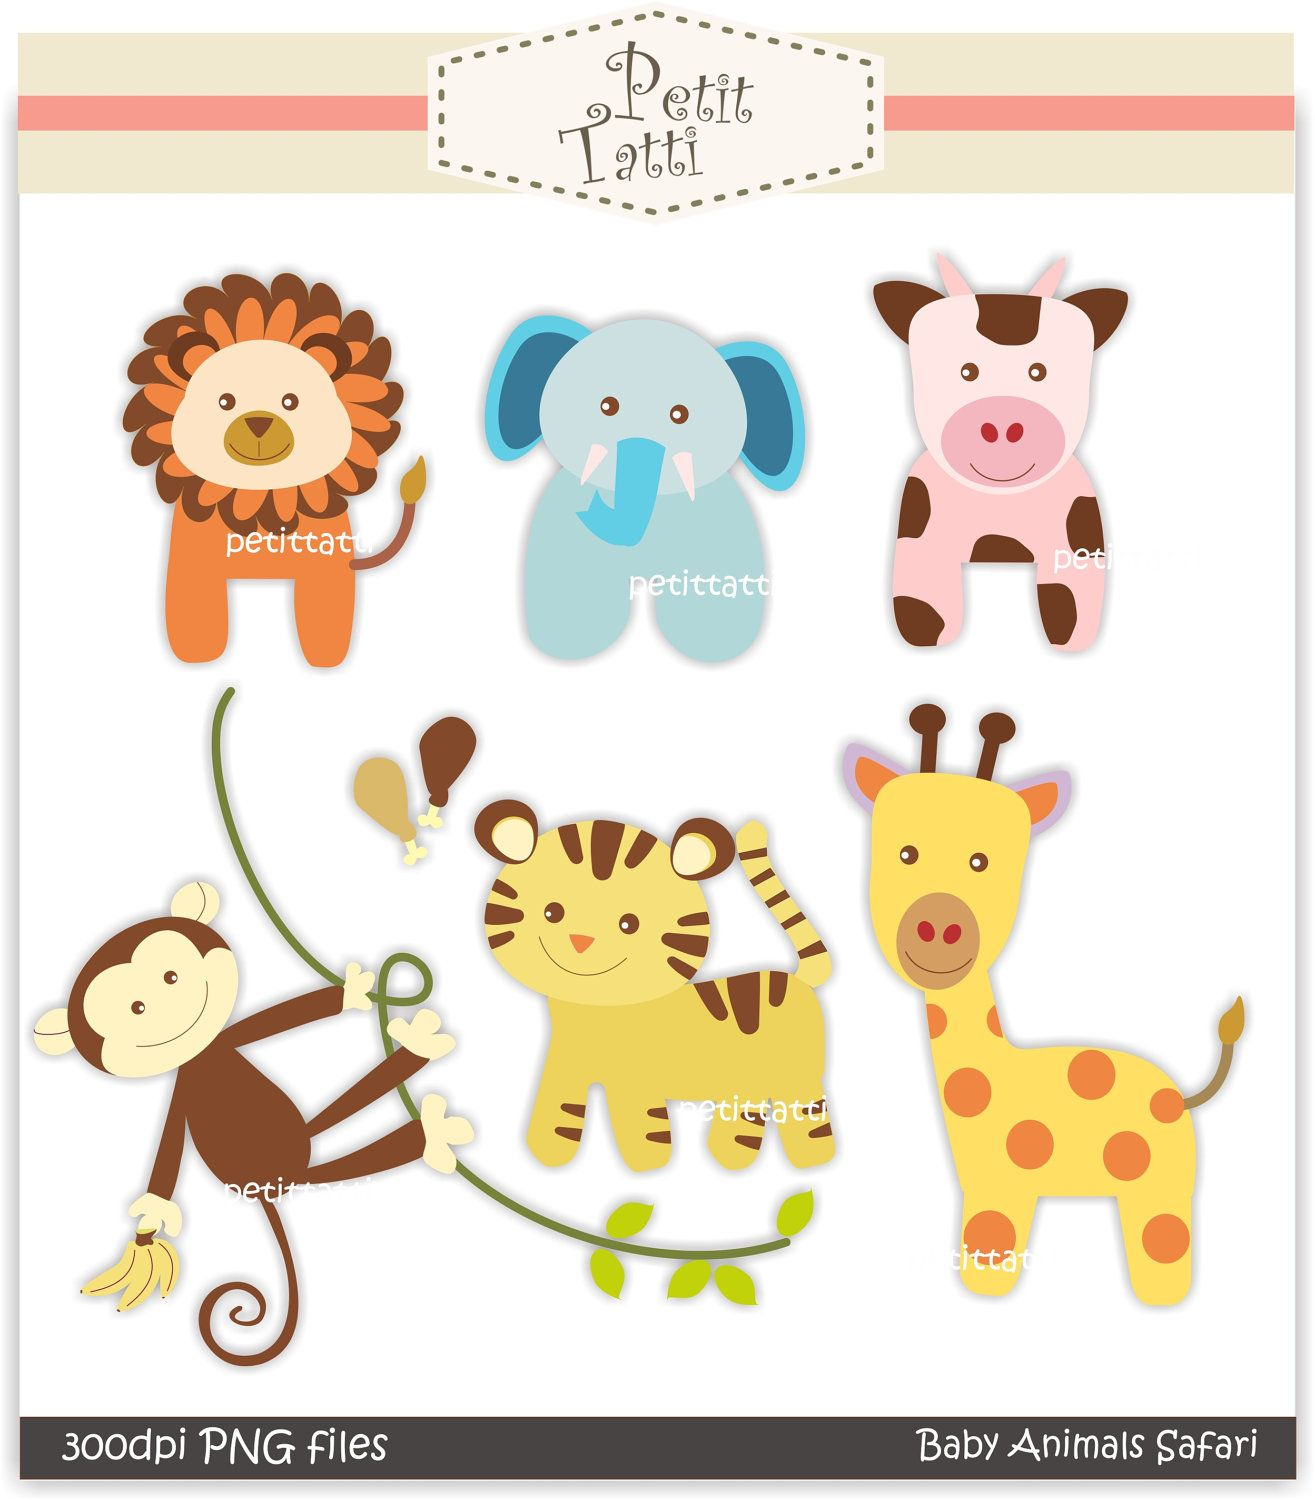 Free Printable Baby Clip Art |  Clip Art., Baby Animal Safari - Free Printable Pictures Of Baby Animals